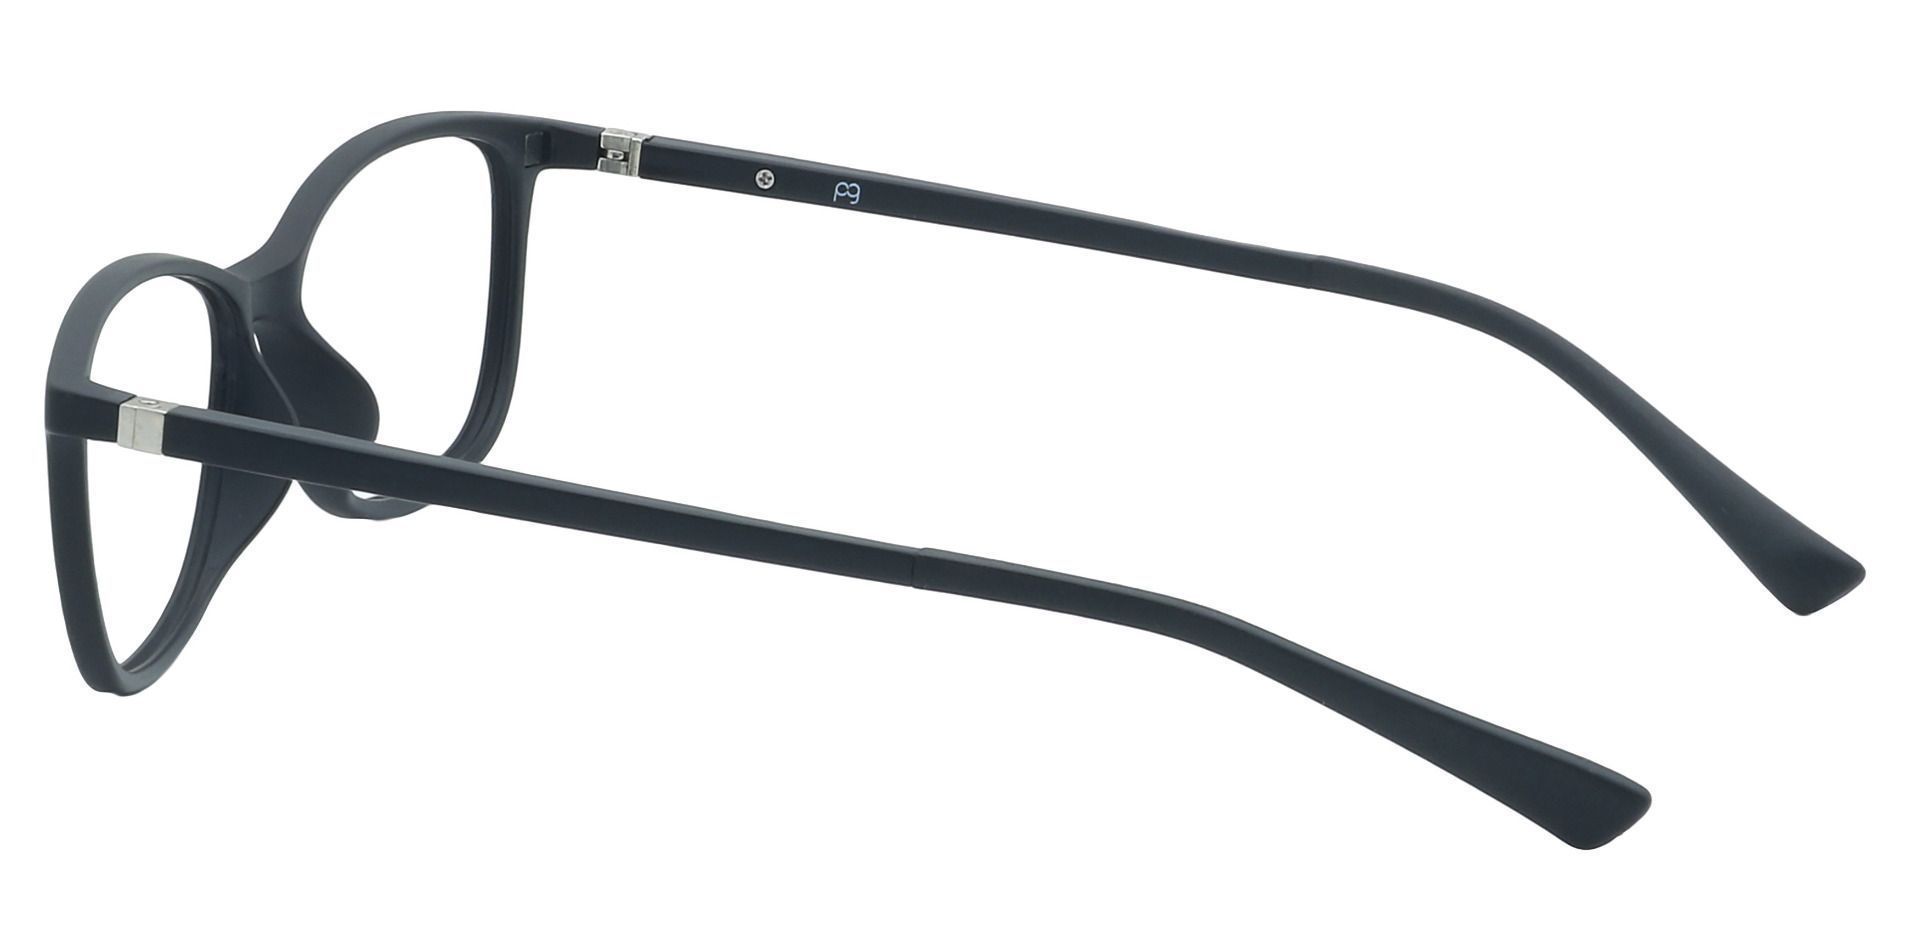 Nia Oval Eyeglasses Frame - Black